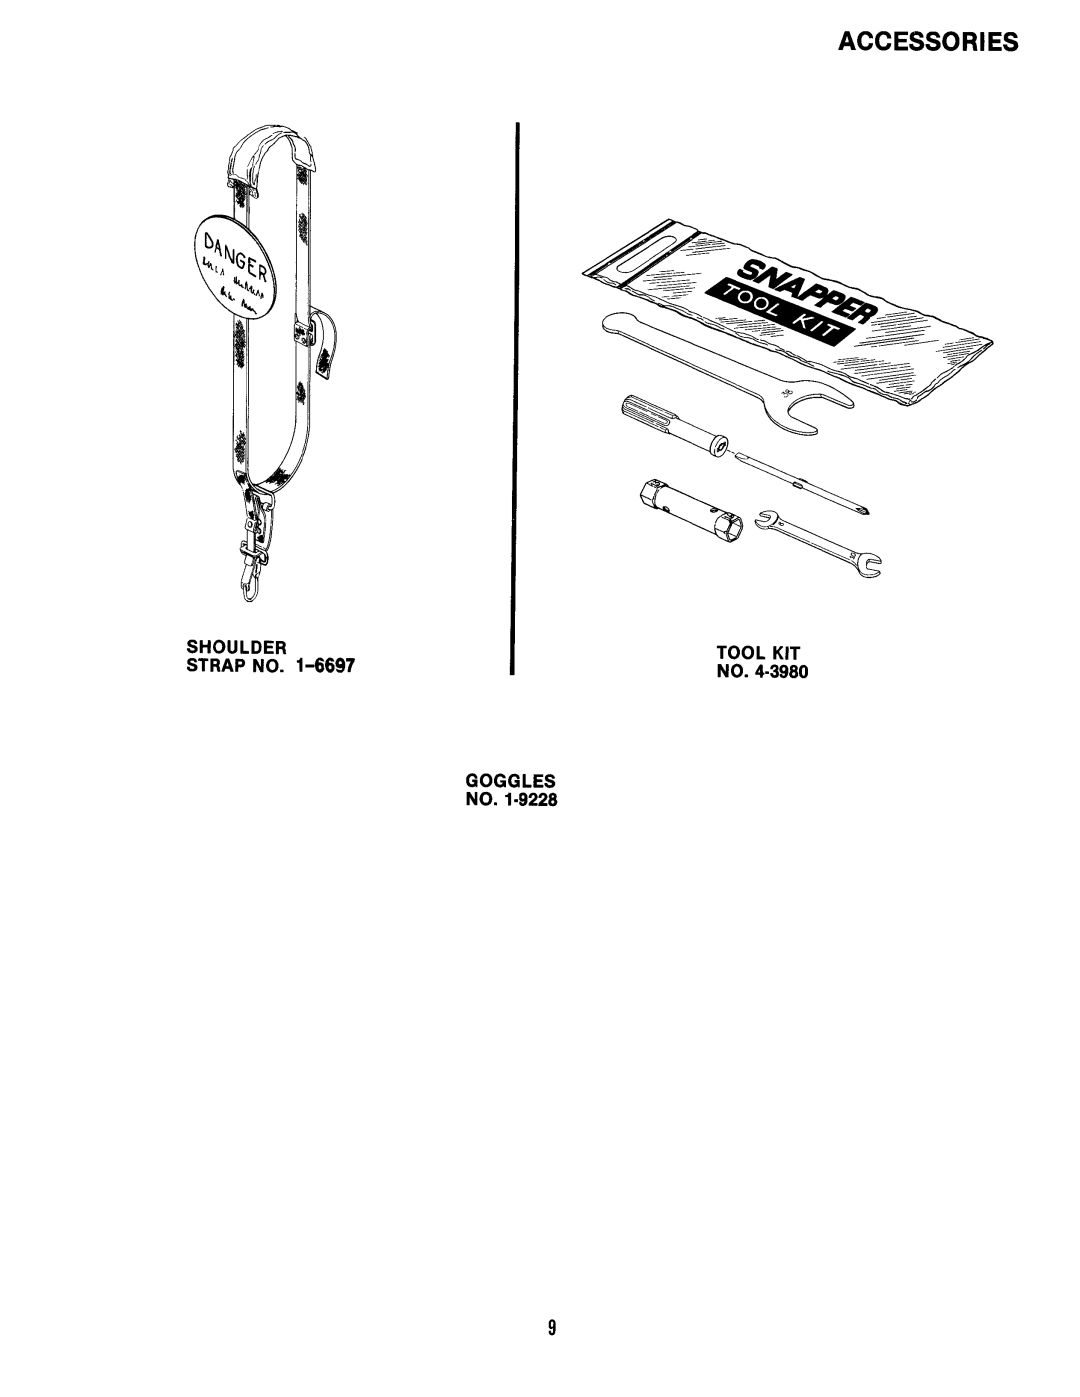 Snapper 2111SST manual 